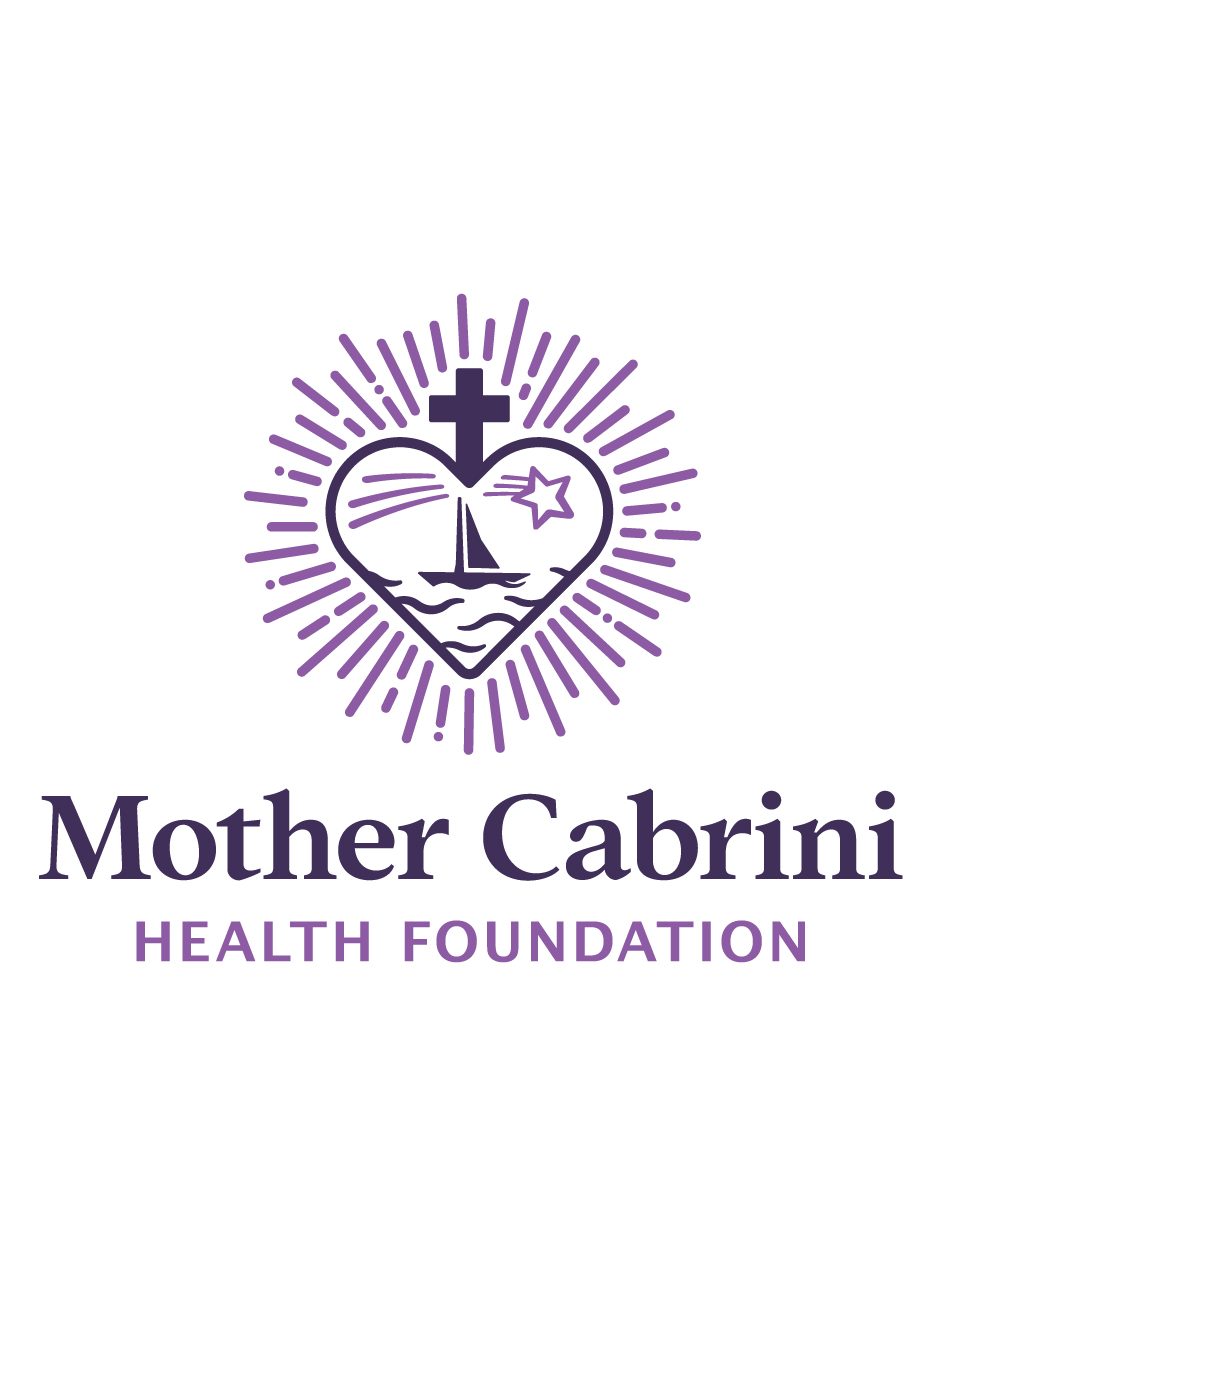 Mother Cabrini Health Foundation image